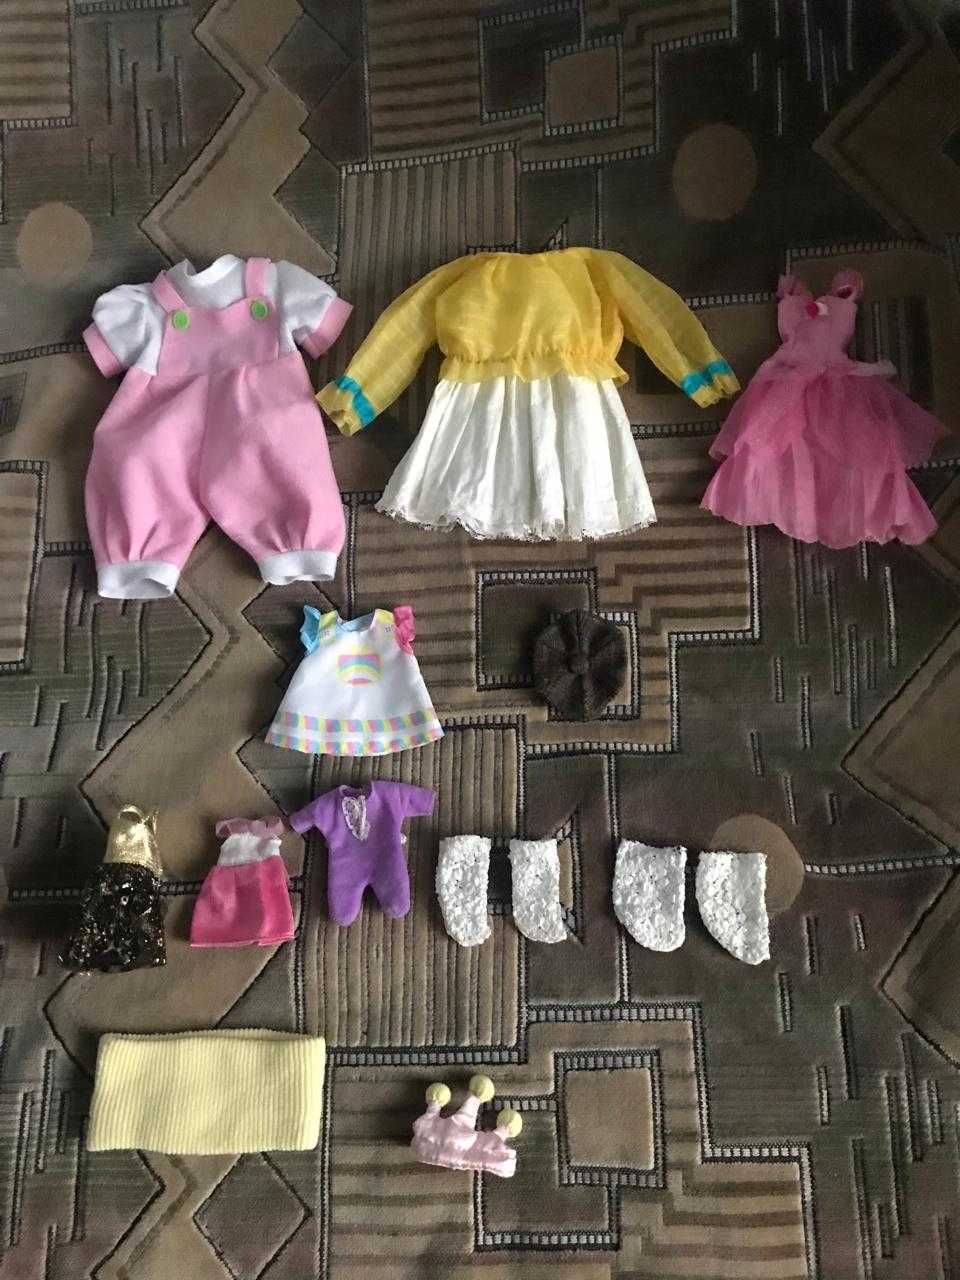 Одежда для кукол